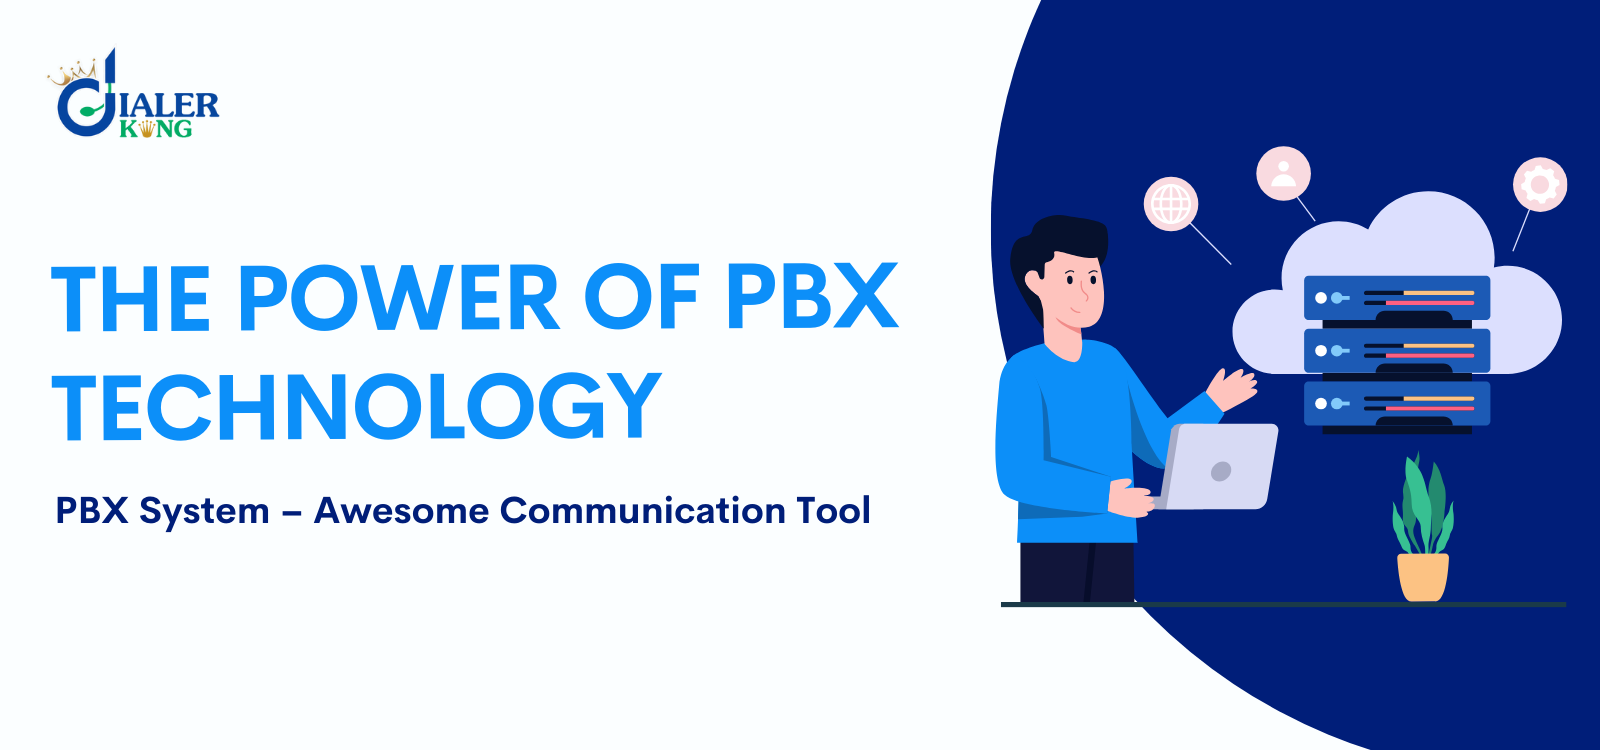 The Power of PBX Technology